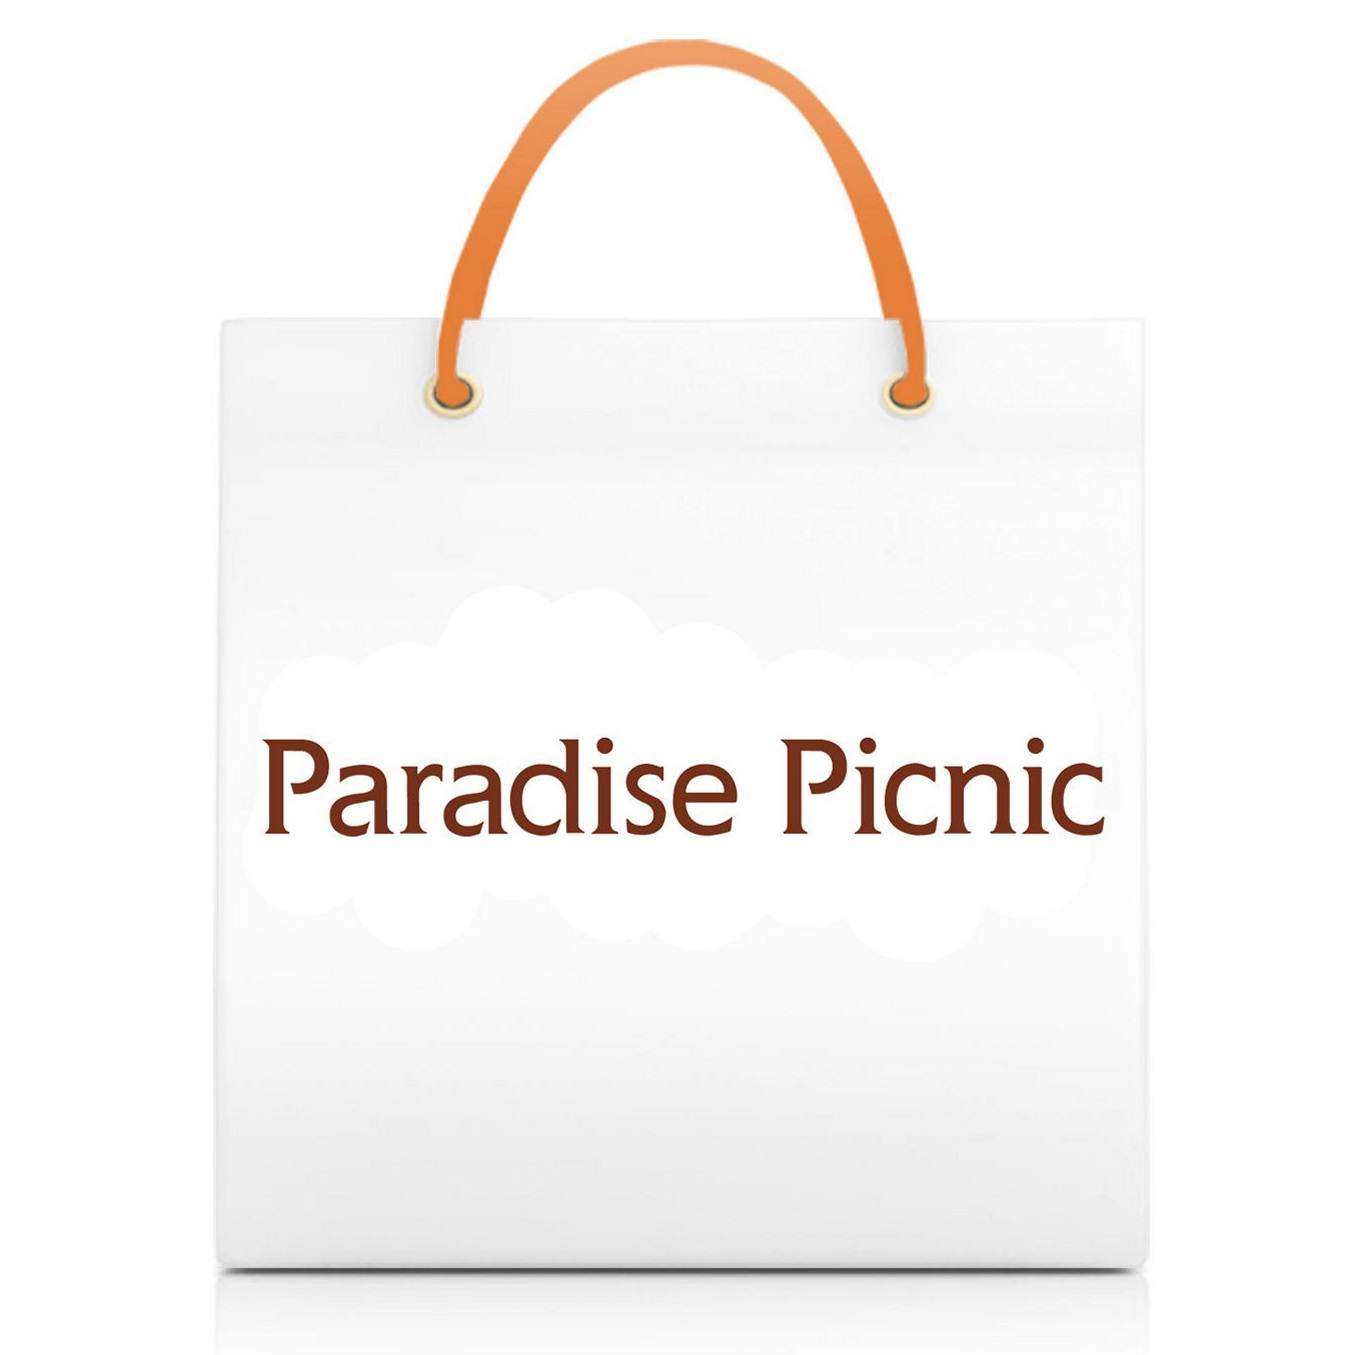 良書網 Paradise Picnic 2013 福袋 (總值55,000~60,000日元, 共7~8件) 出版社: HappyBag Code/ISBN: 2013ParadisePicnic